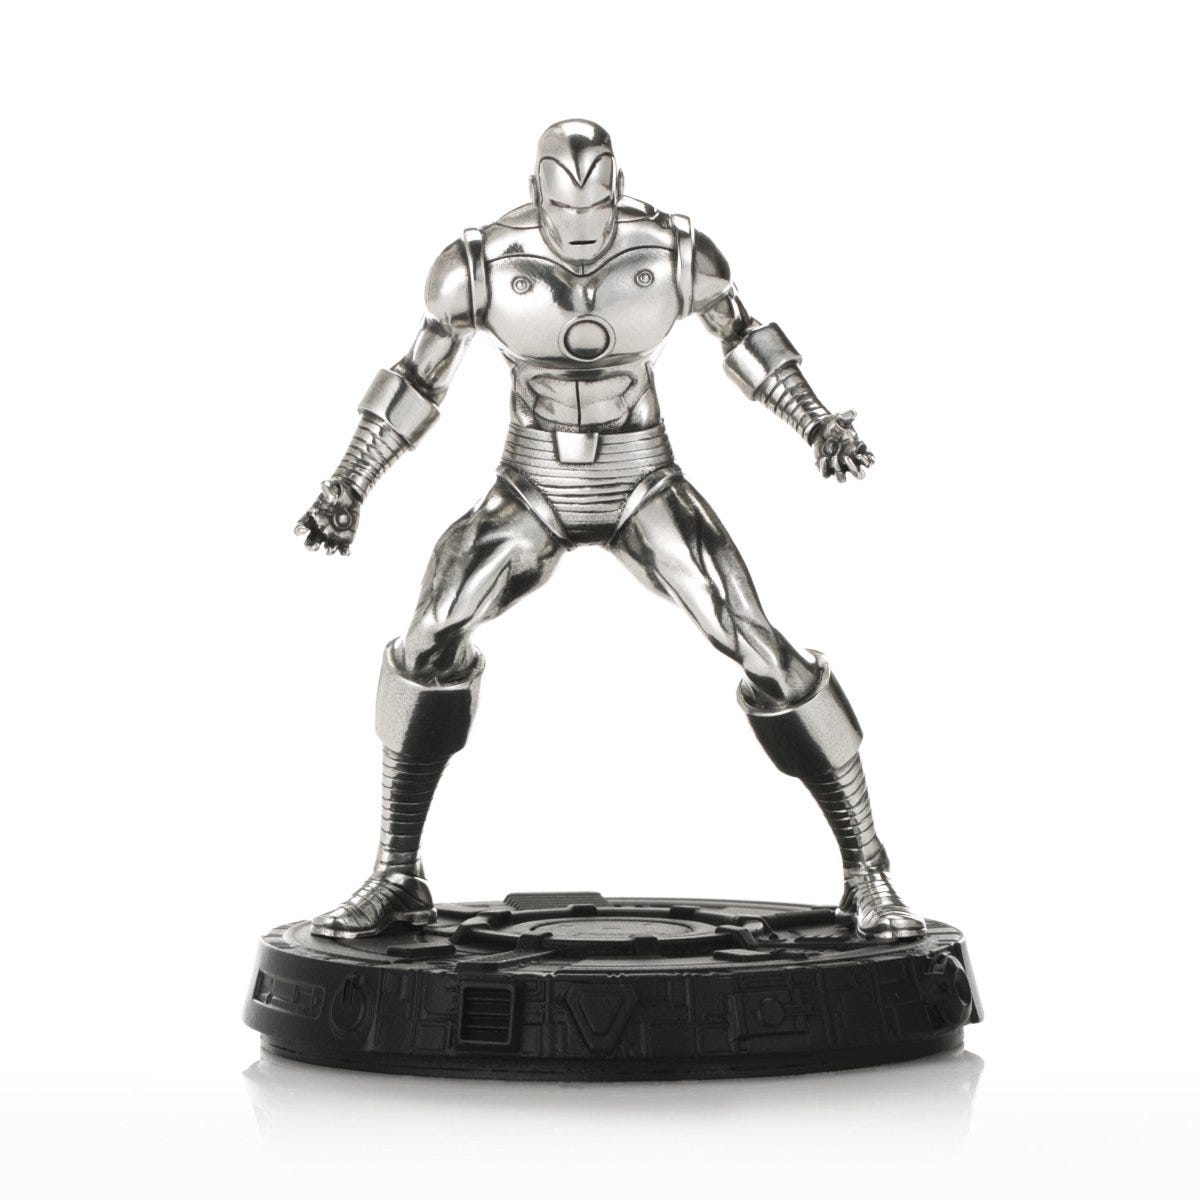 Royal Selangor Marvel Iron Man Invincible Figurine - Pewter - Notbrand